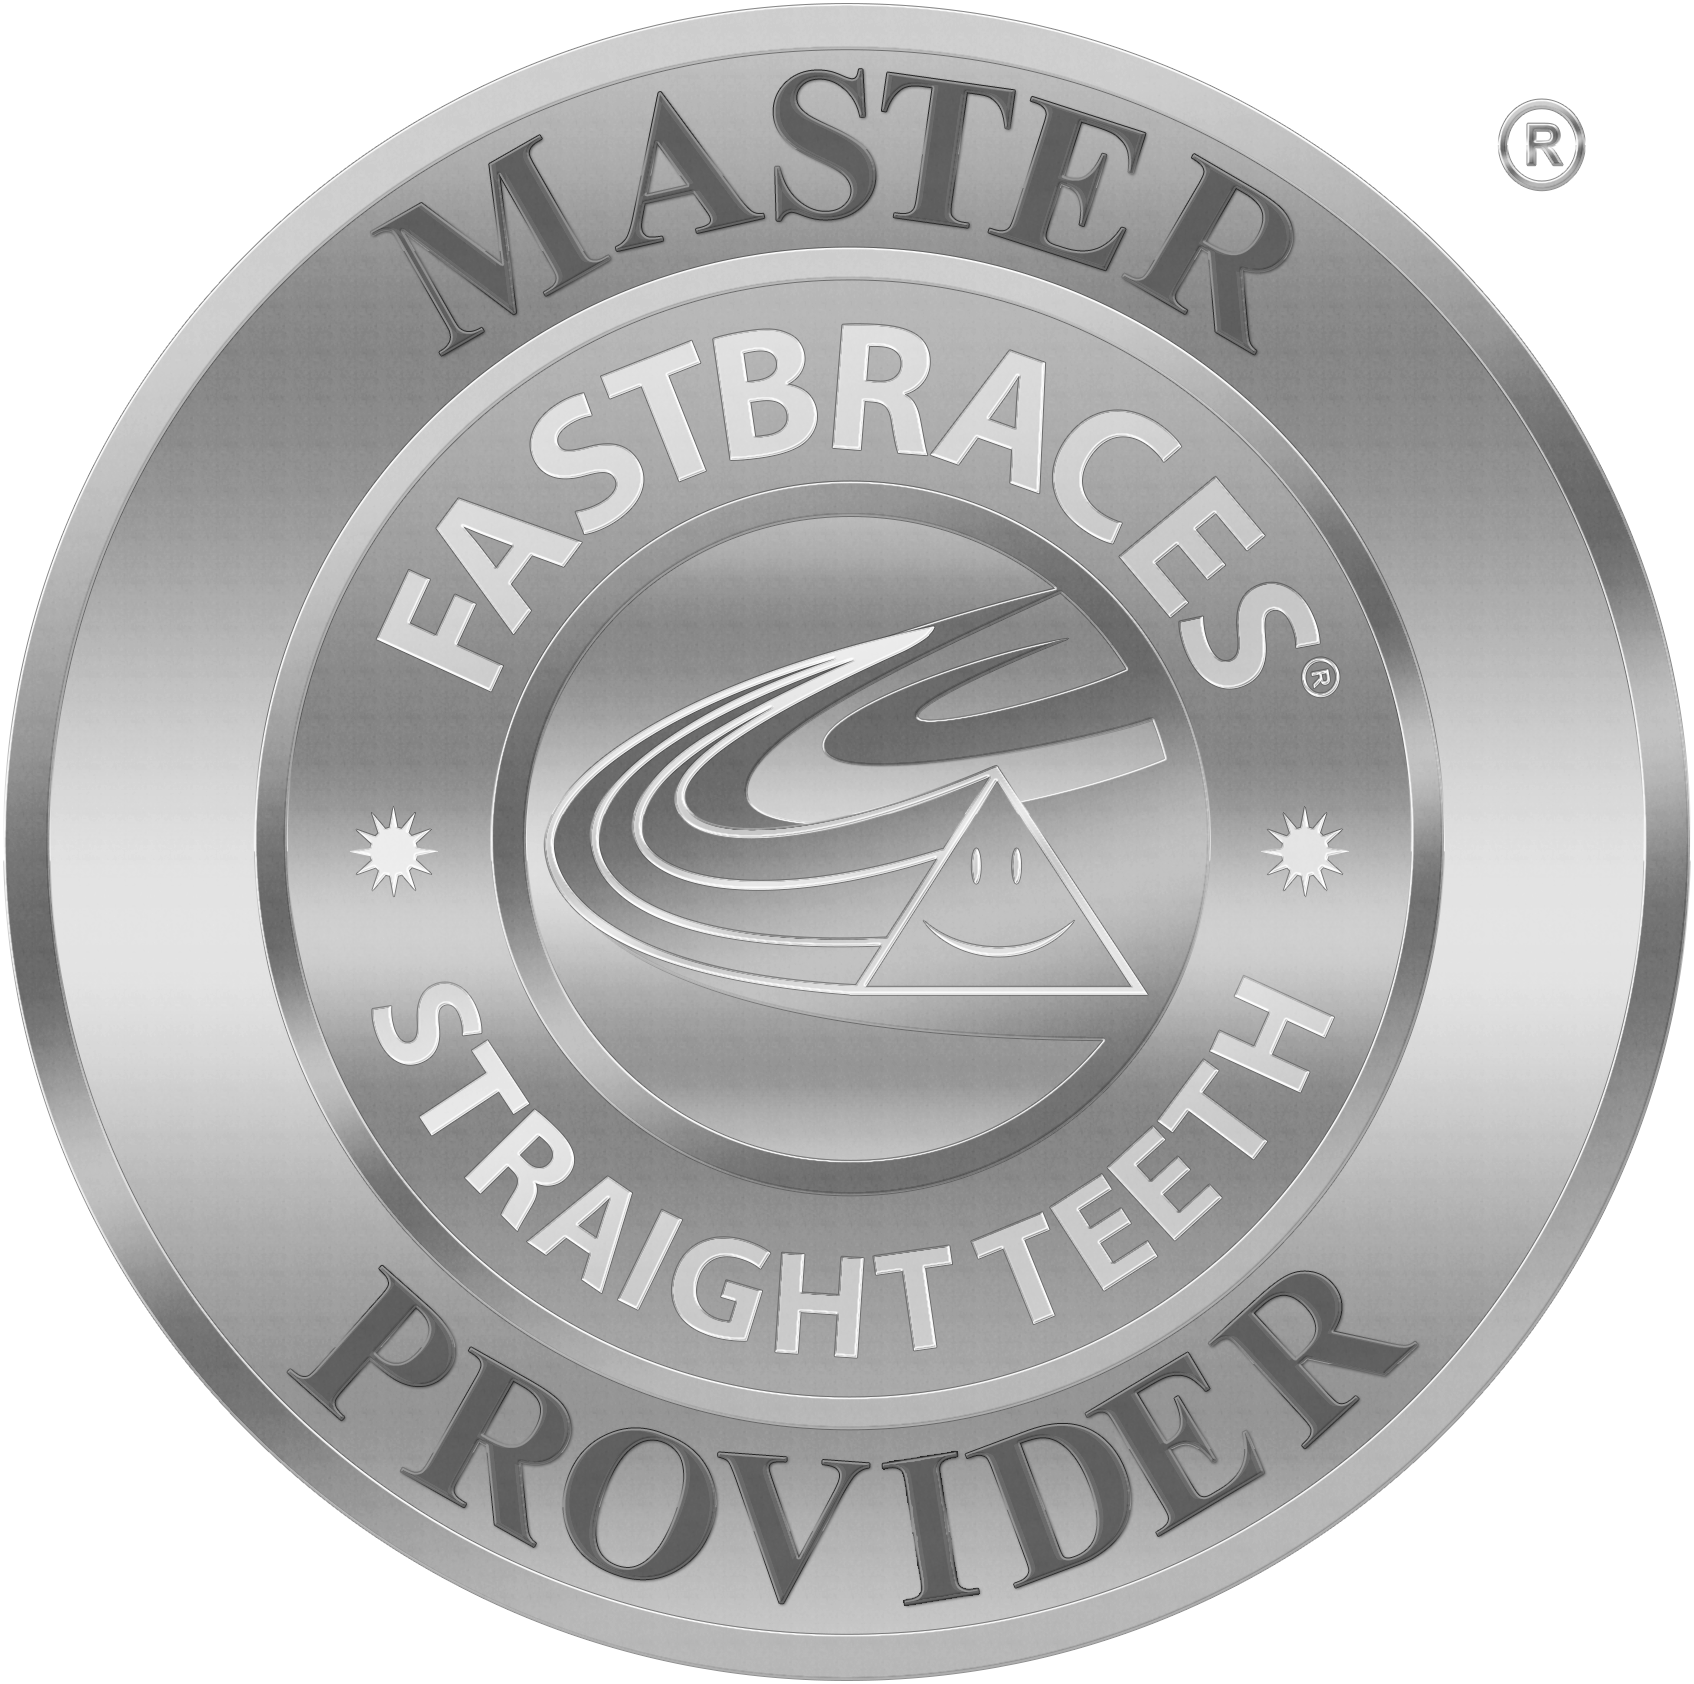 Fastbraces Master Provider